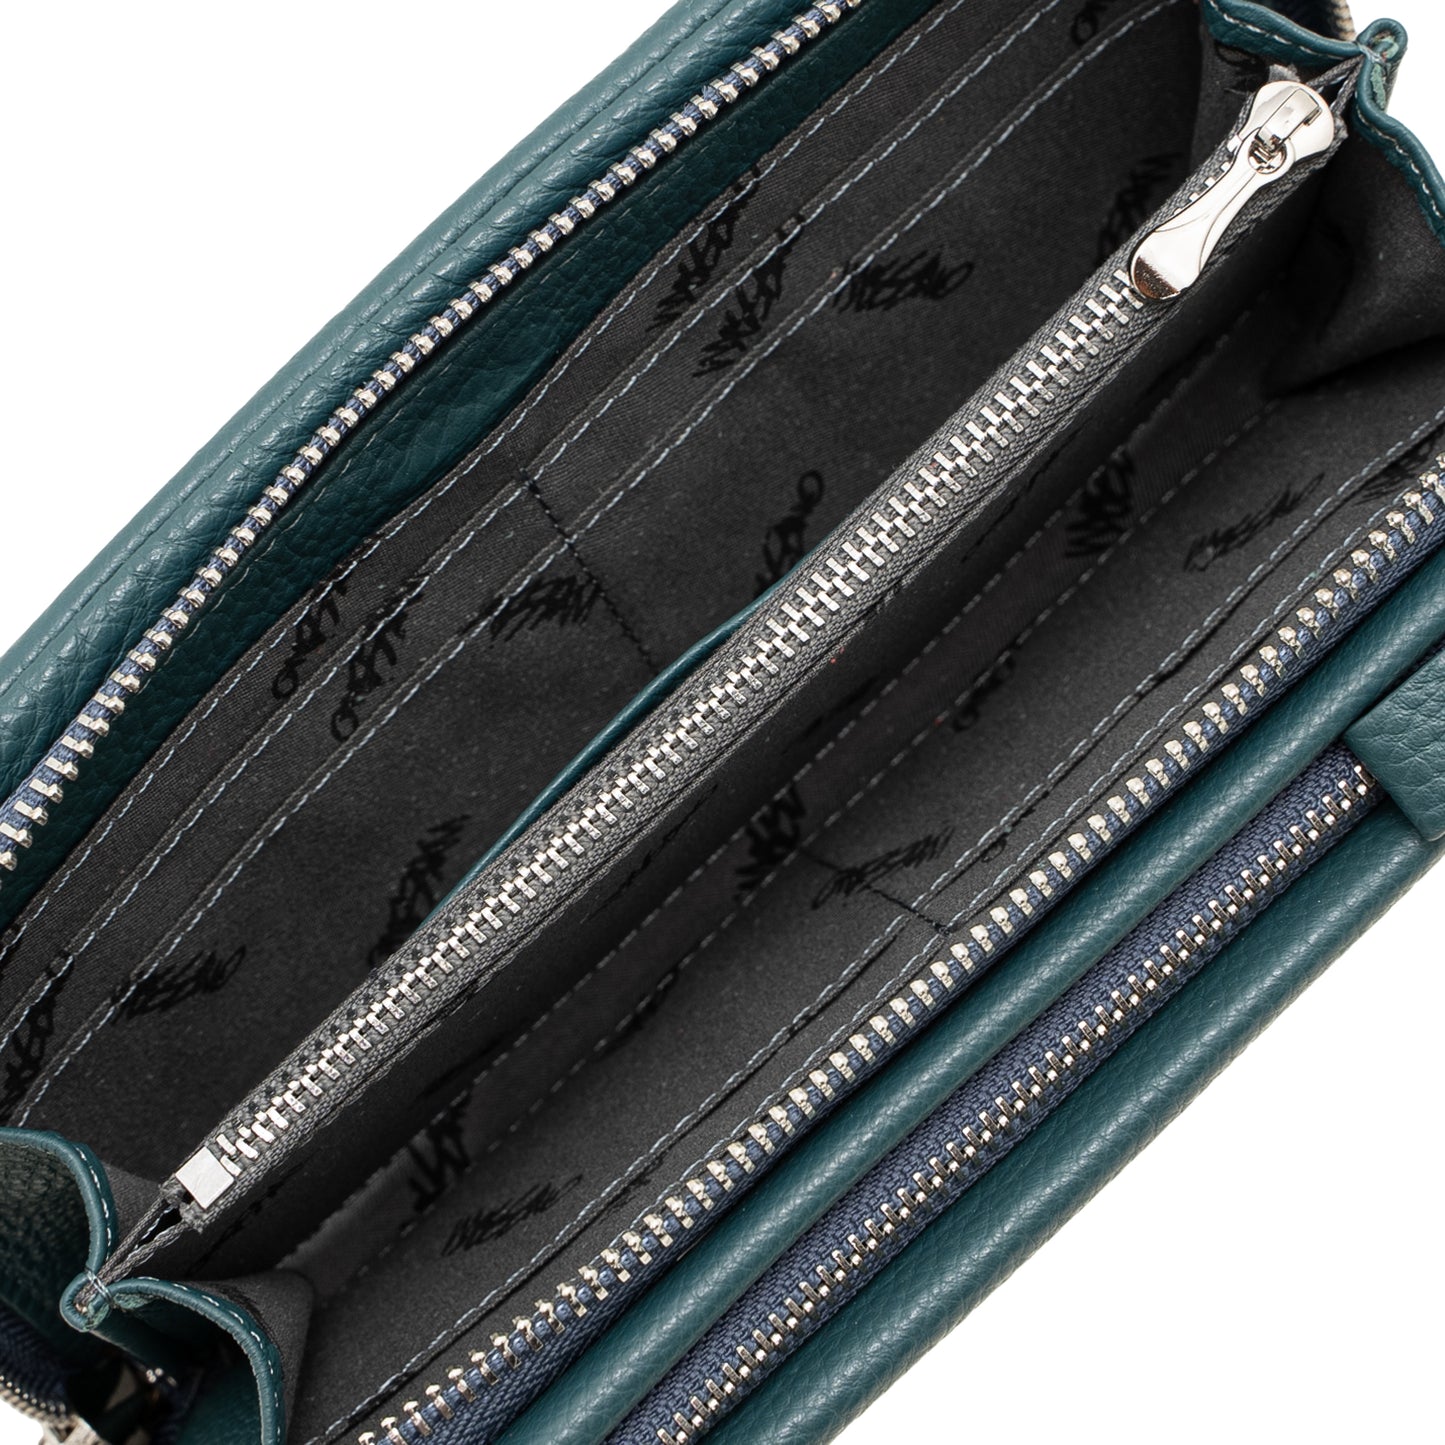 MOSSIMO Ladies Bi-Fold Long Wallet